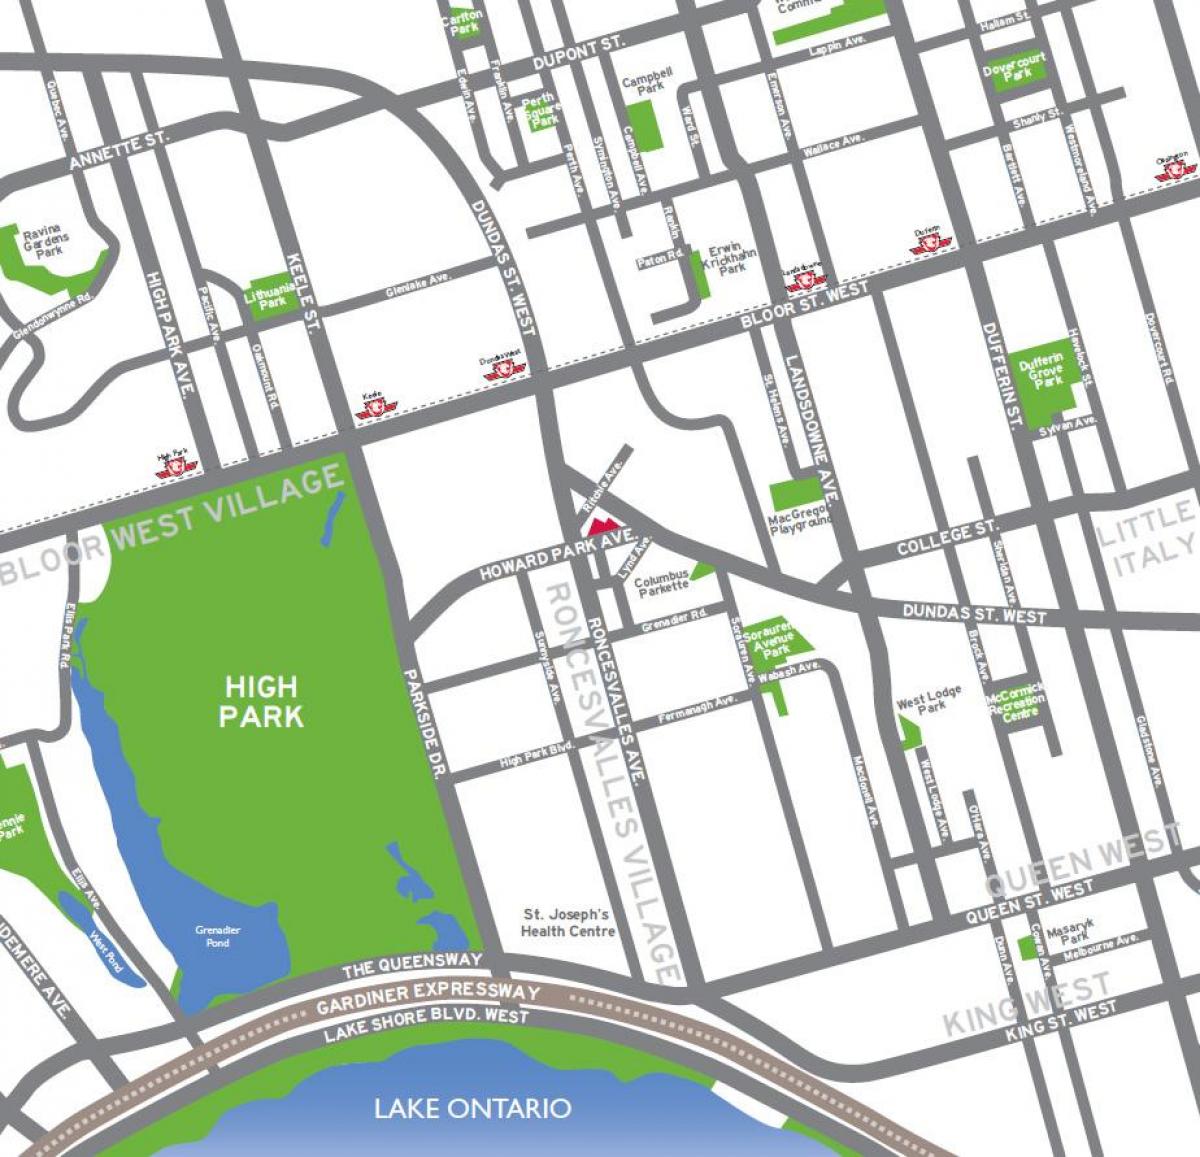 Mapa Handiko parke Toronto ikuspegi orokorra